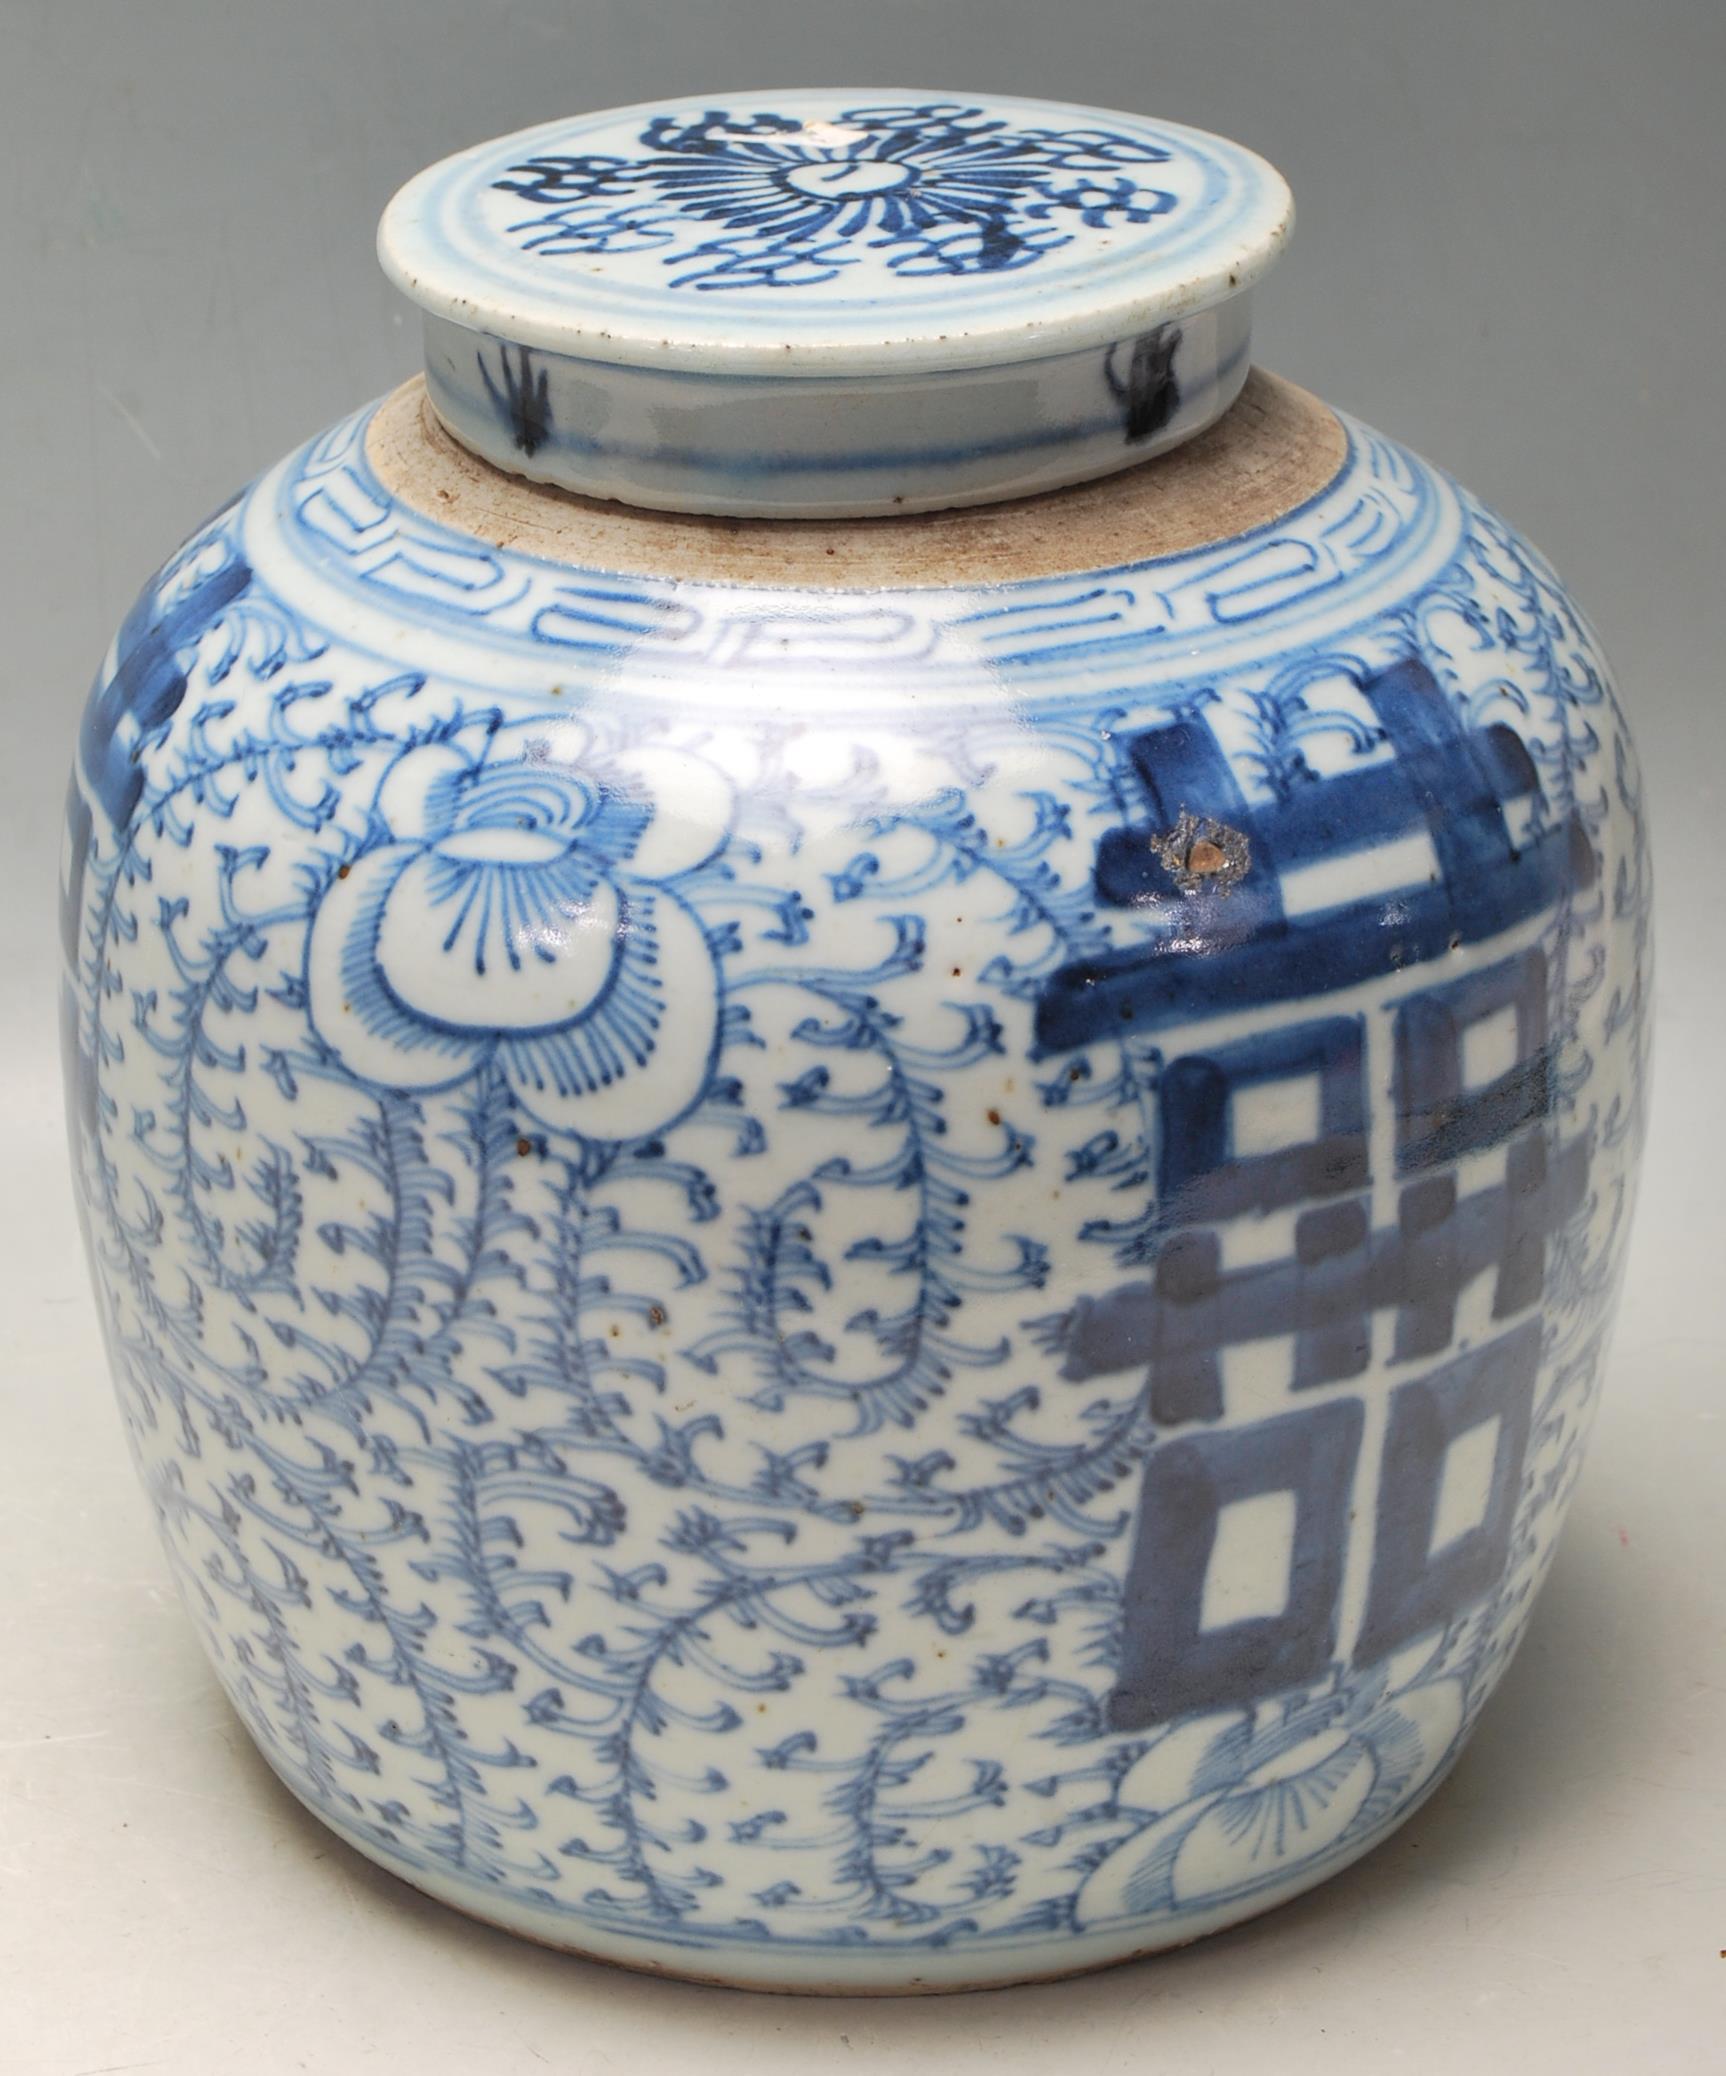 LATE 19TH CENTURY KANGXI CHINESE BLUE AND WHITE VASE - Image 6 of 9